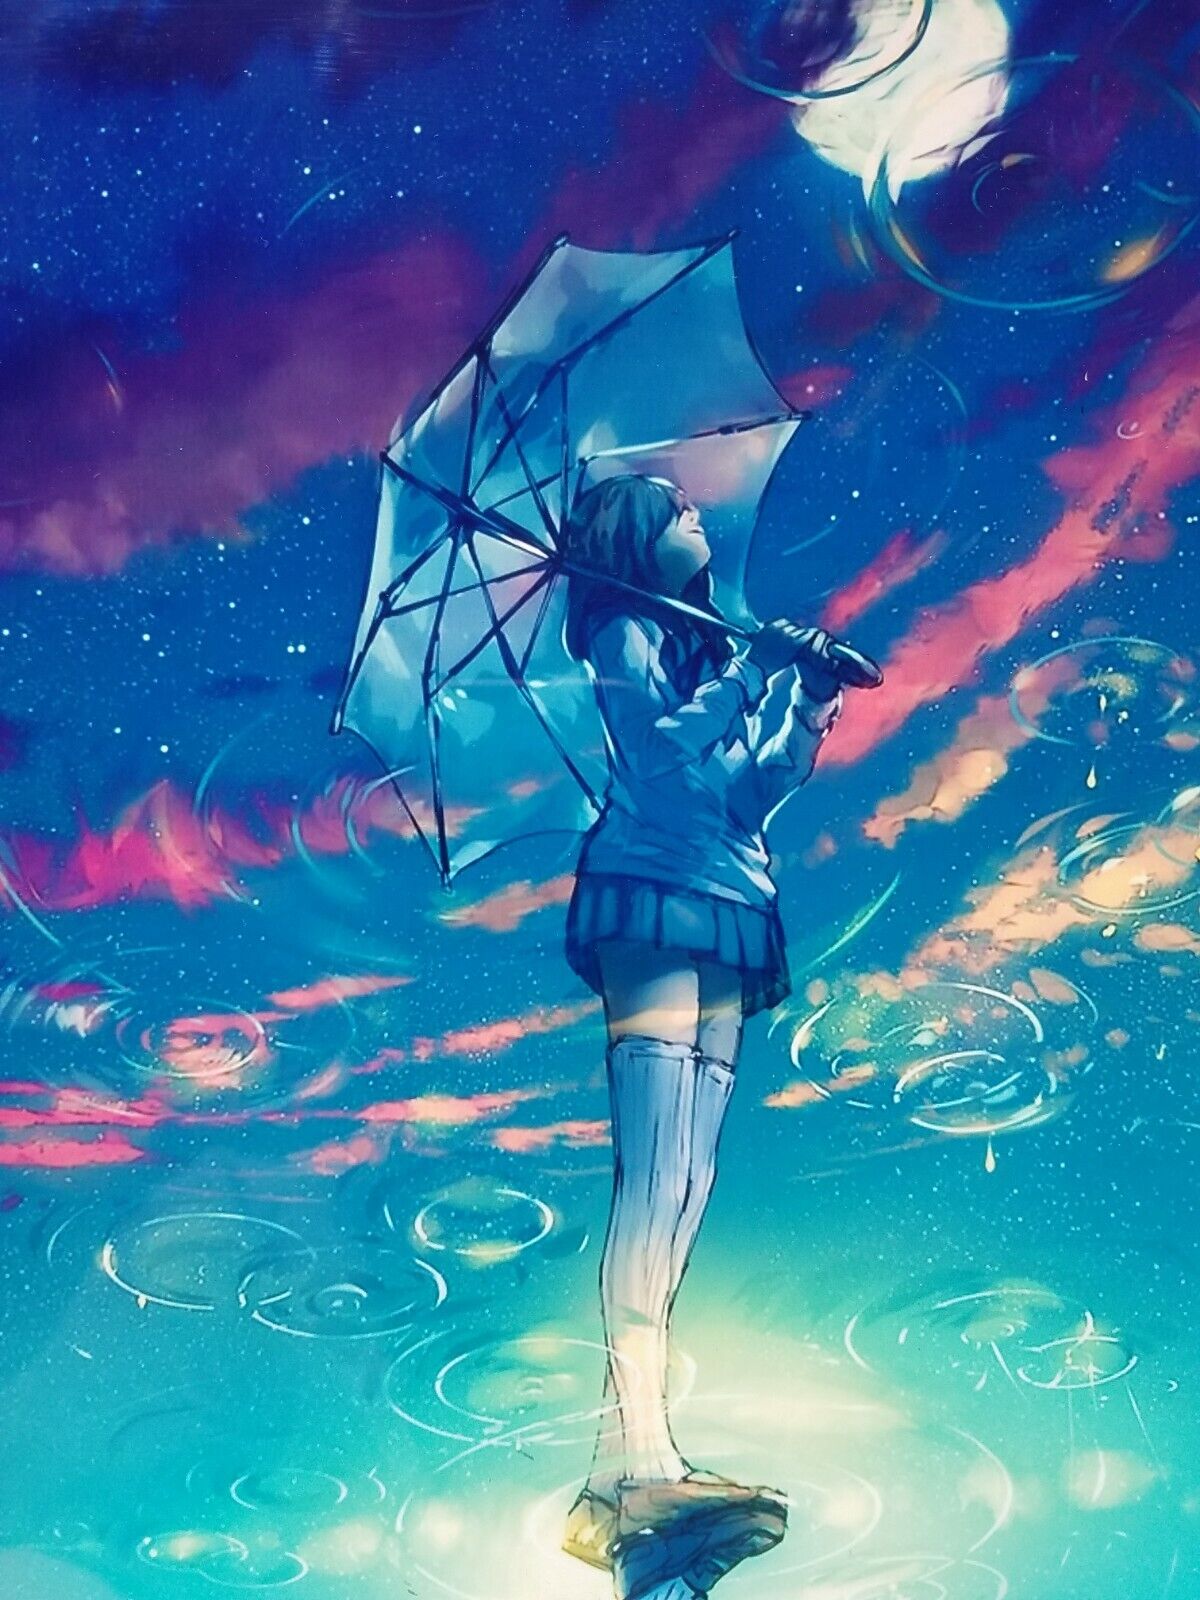 Premium AI Image | Two anime girls with an umbrella in the rain